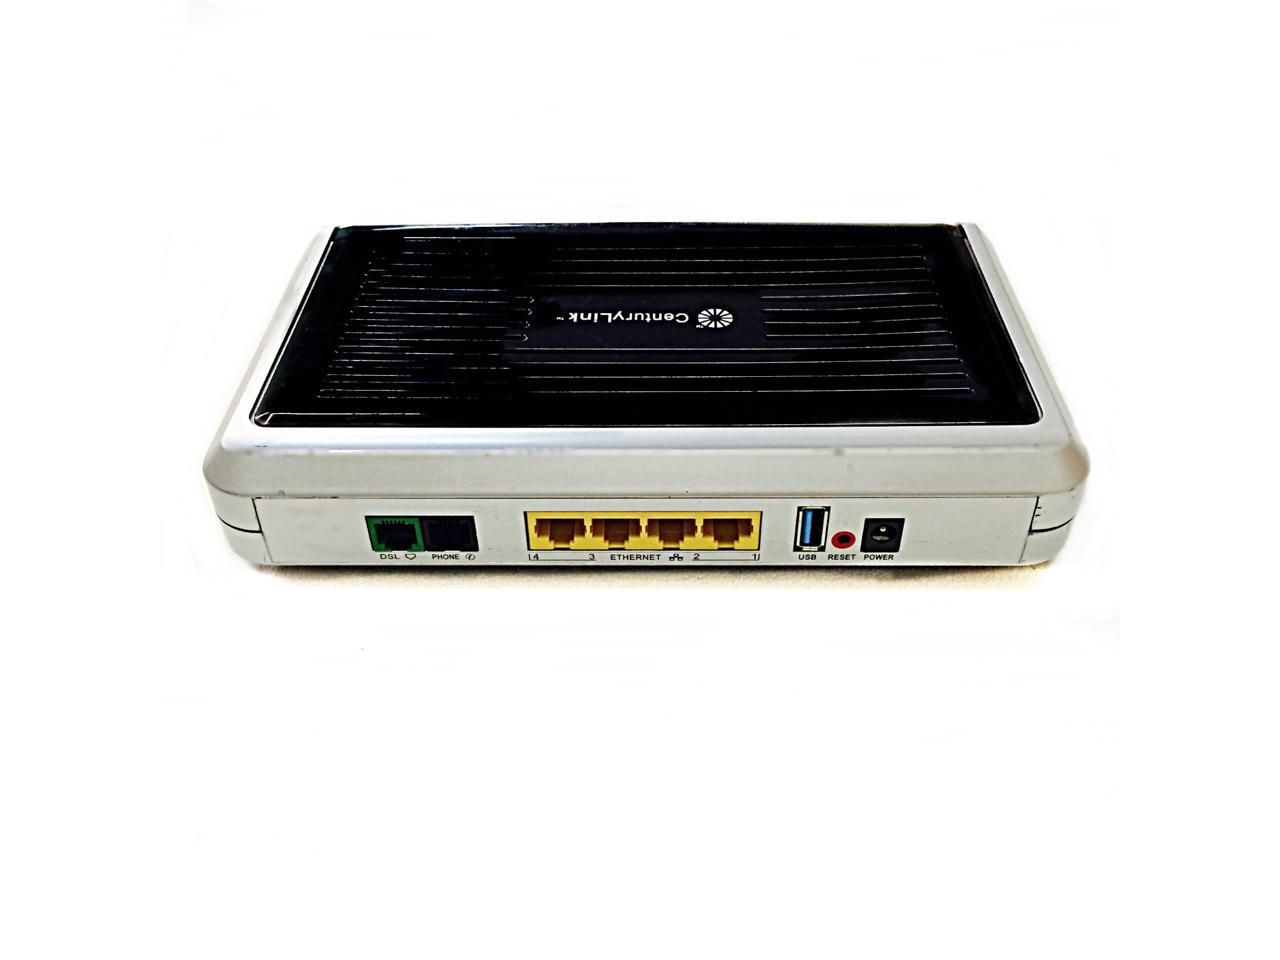 Actiontec CenturyLink C1000A 300 Mbps 4-Port Wireless N Router Gigabit Modem 